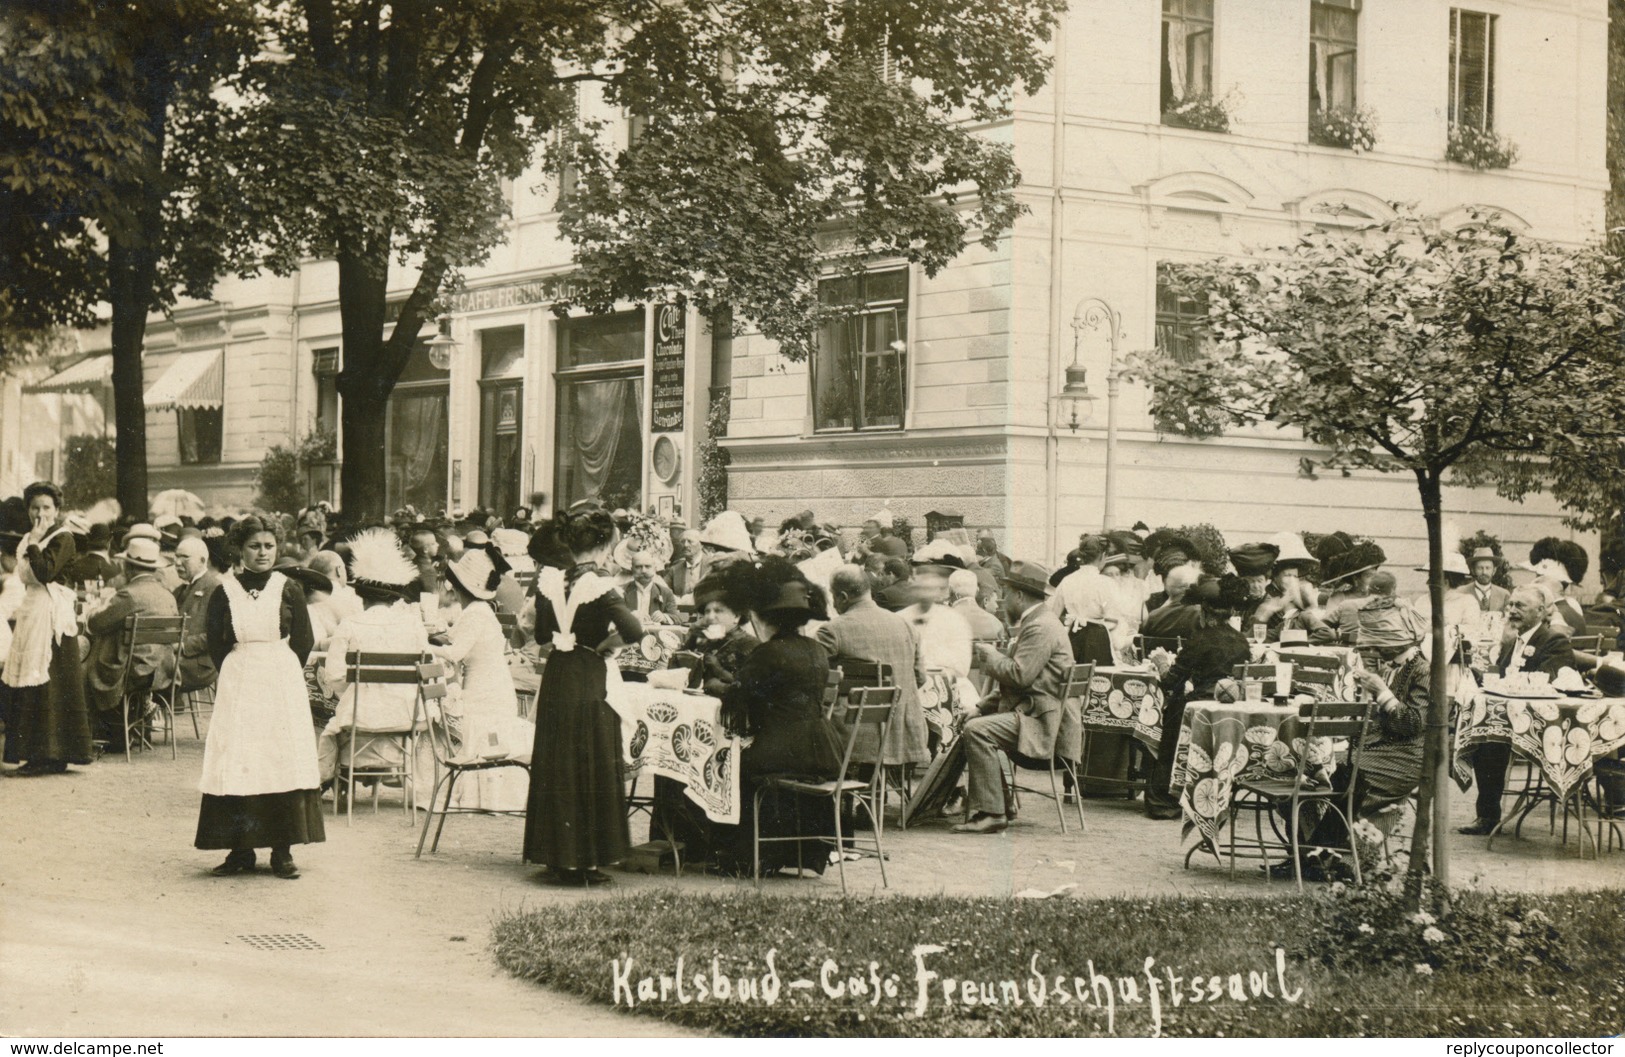 KARLSBAD / Karlovy Vary - Cafe Freundschaftssaal - Sudeten